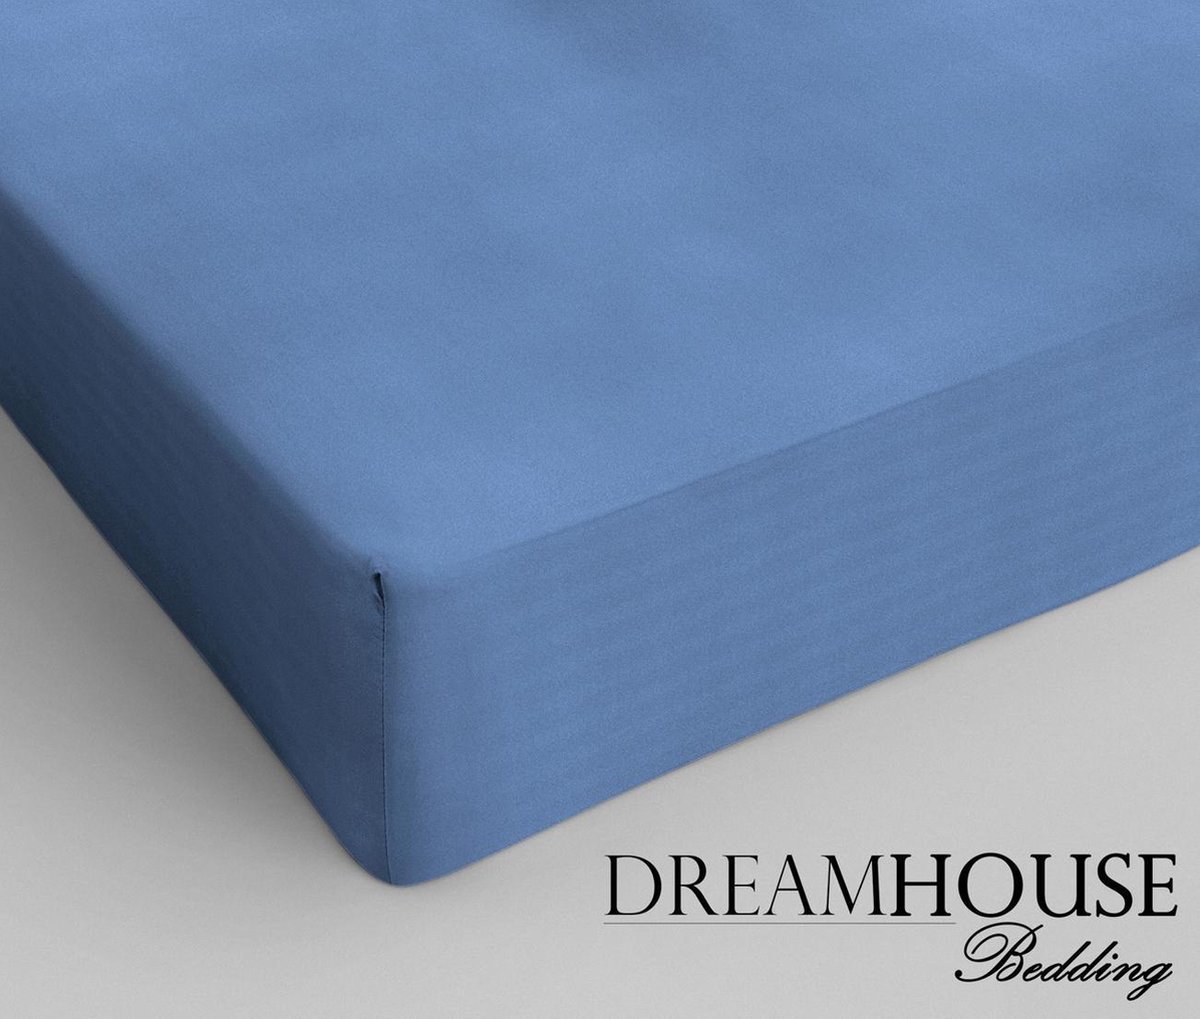 Dreamhouse Hoeslaken Katoen-80 X 200 Cm - Blauw